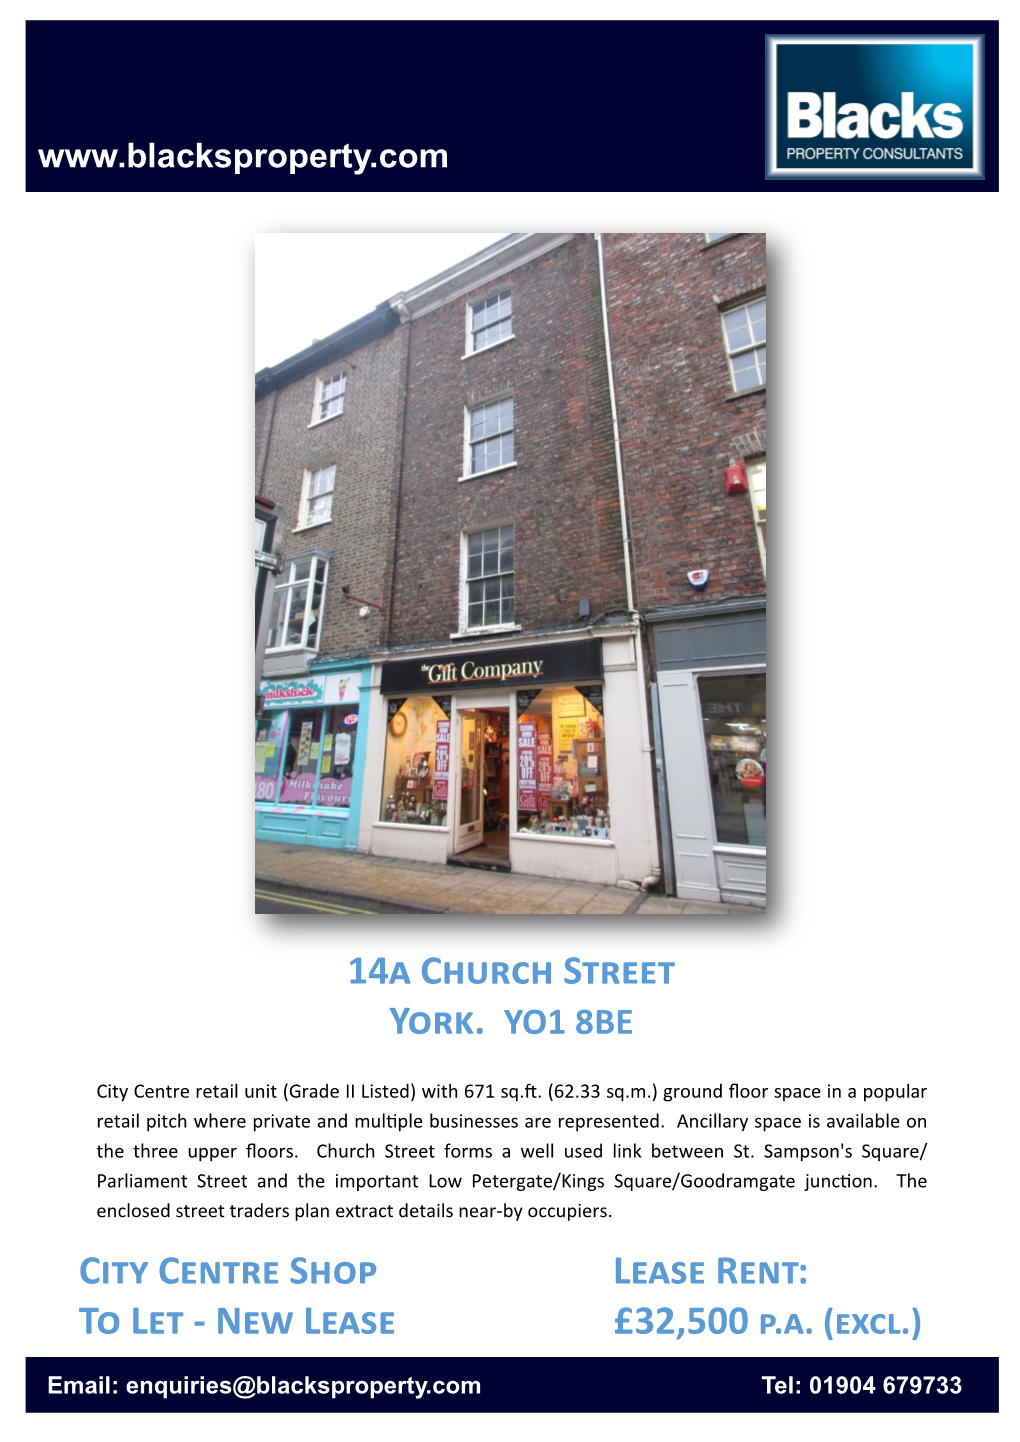 14A Church Street York. YO1 8BE City Centre Shop Lease Rent